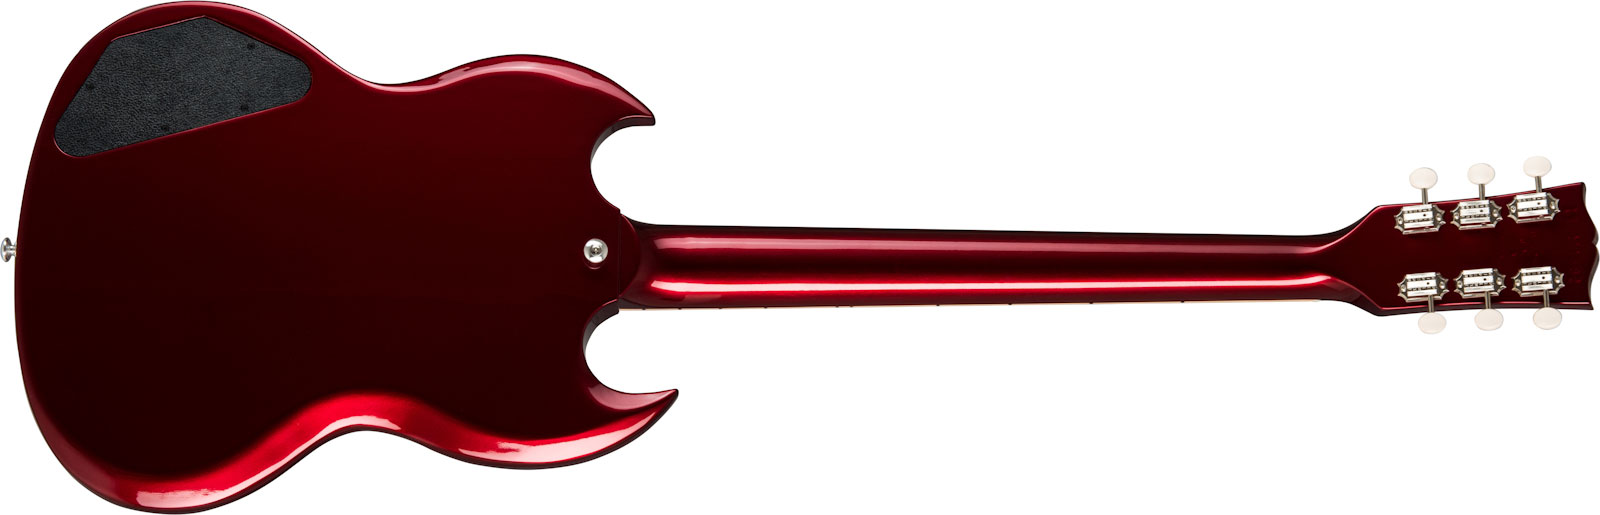 Gibson Sp Special Original 2p90 Ht Rw - Vintage Sparkling Burgundy - Guitarra electrica retro rock - Variation 1